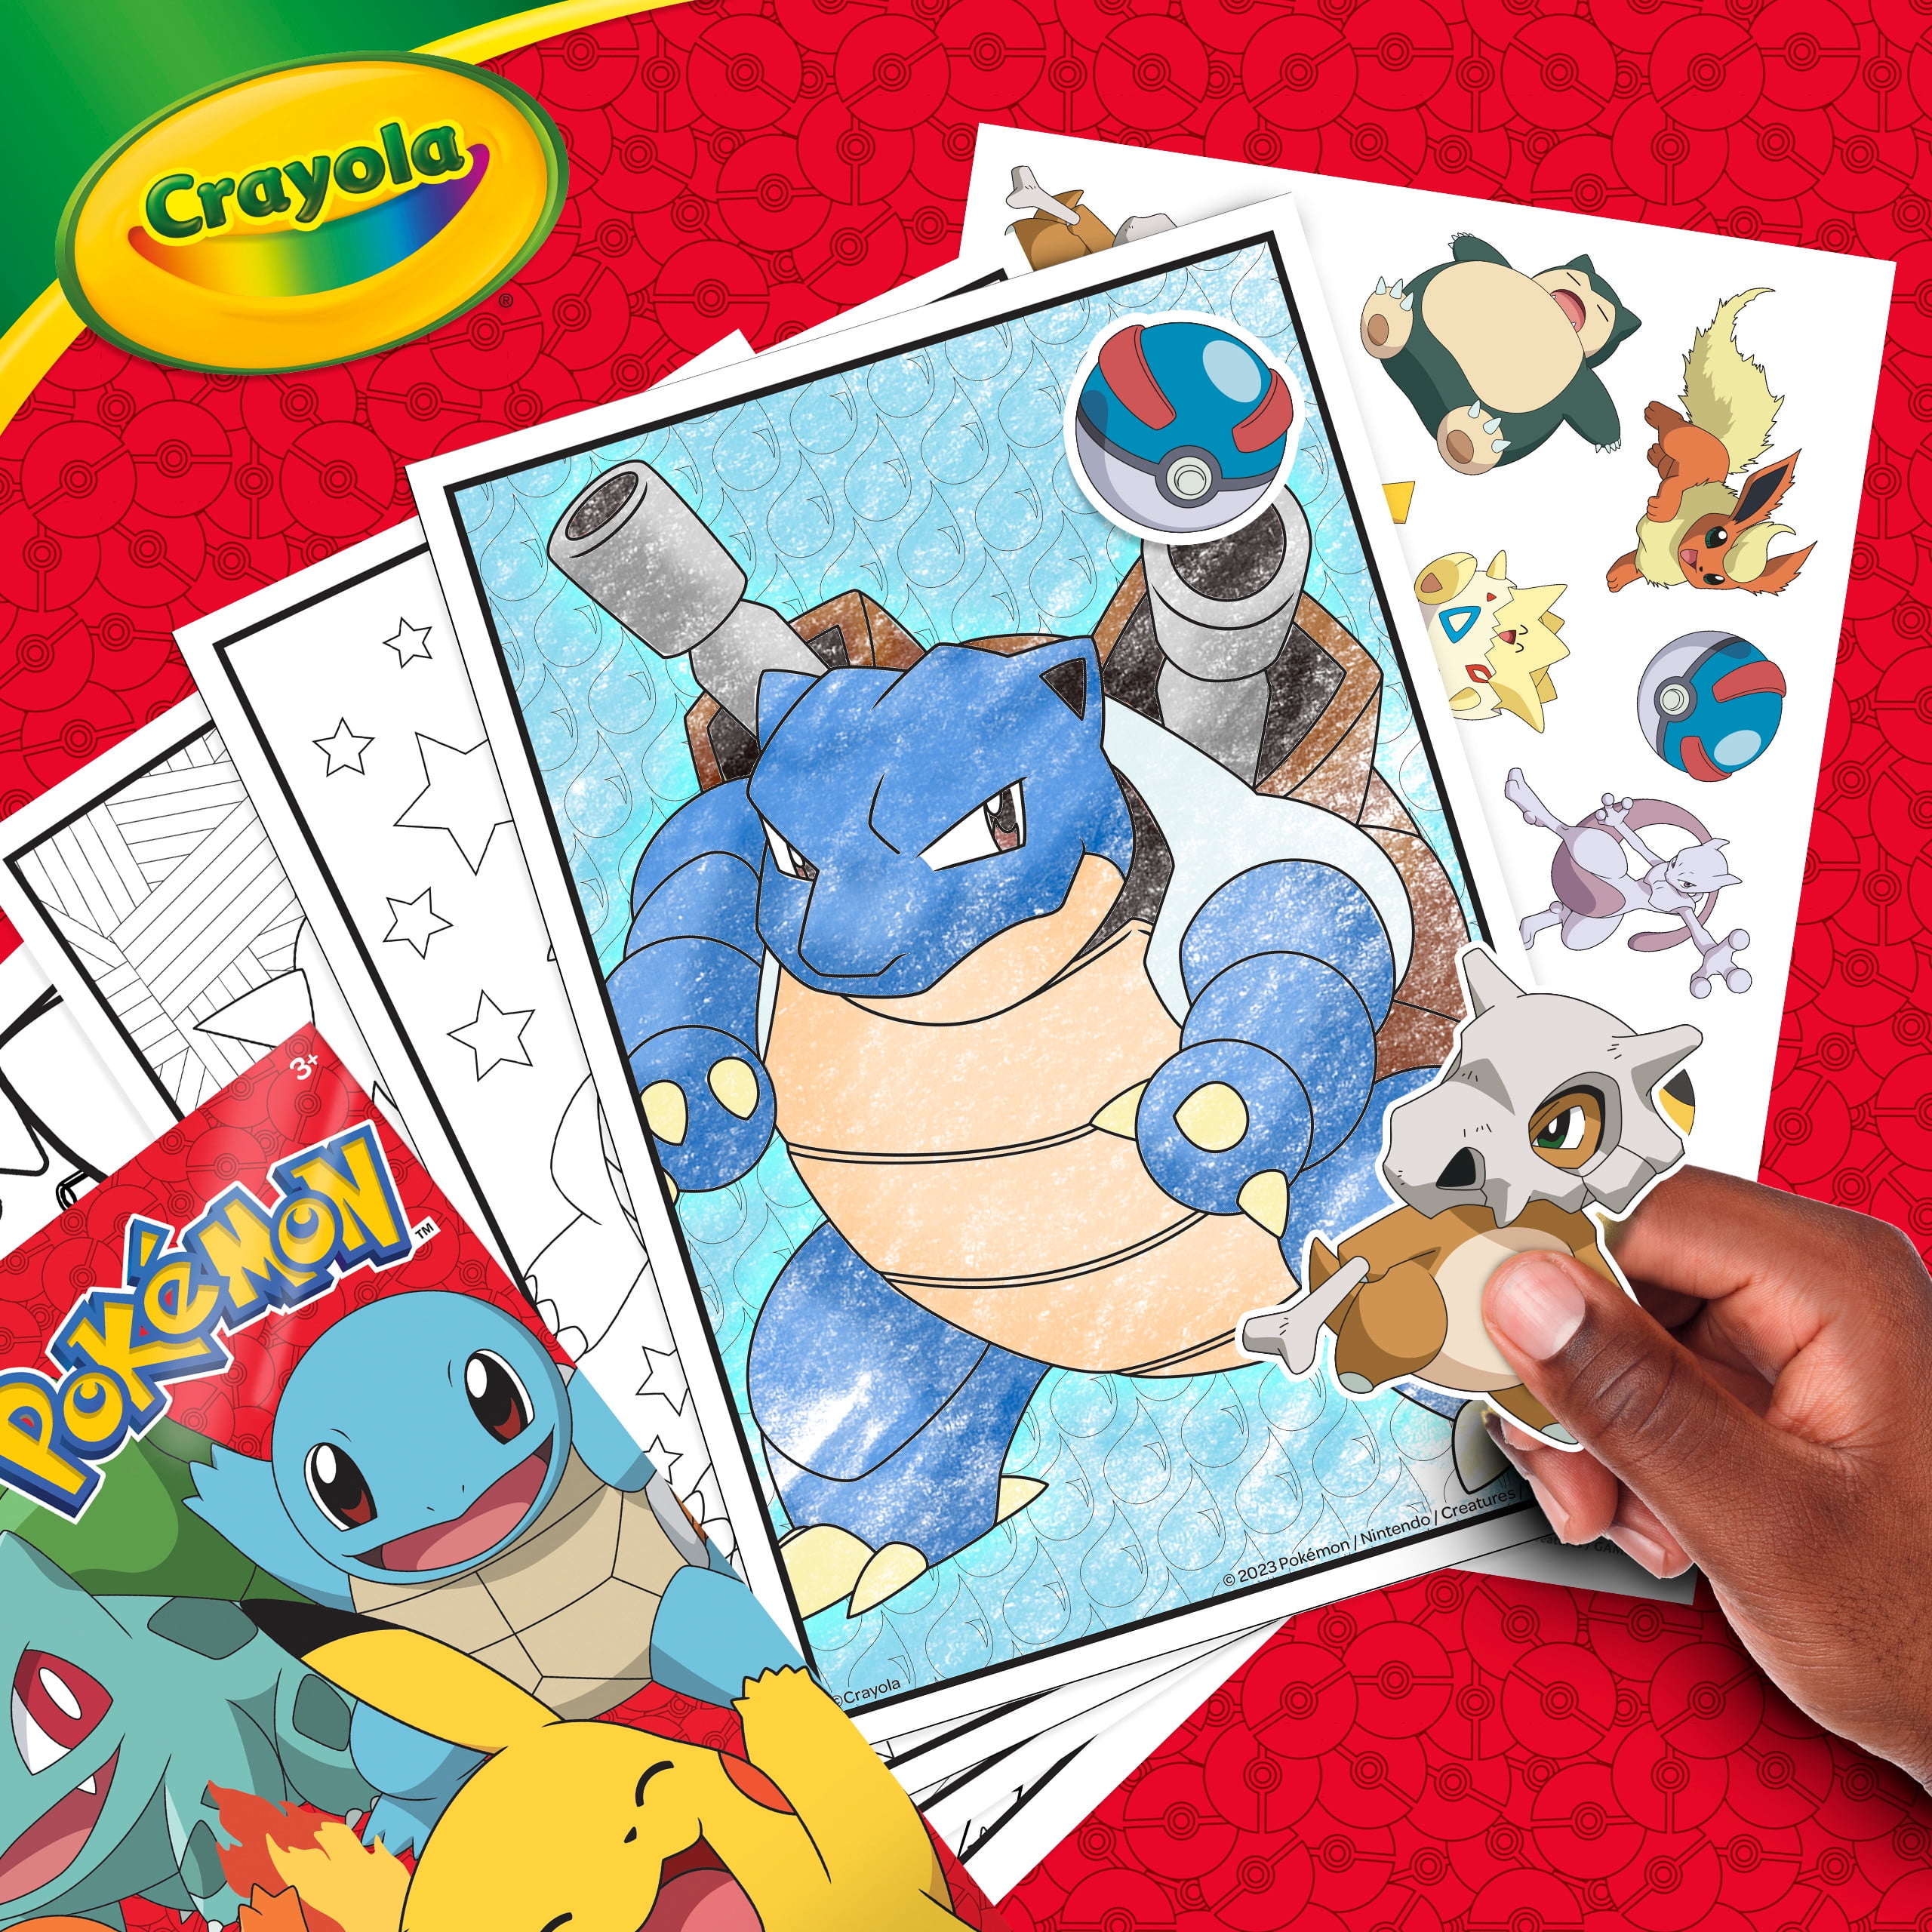 Free: Crayola Pokémon Coloring Art Set, Pikachu, Children, 75